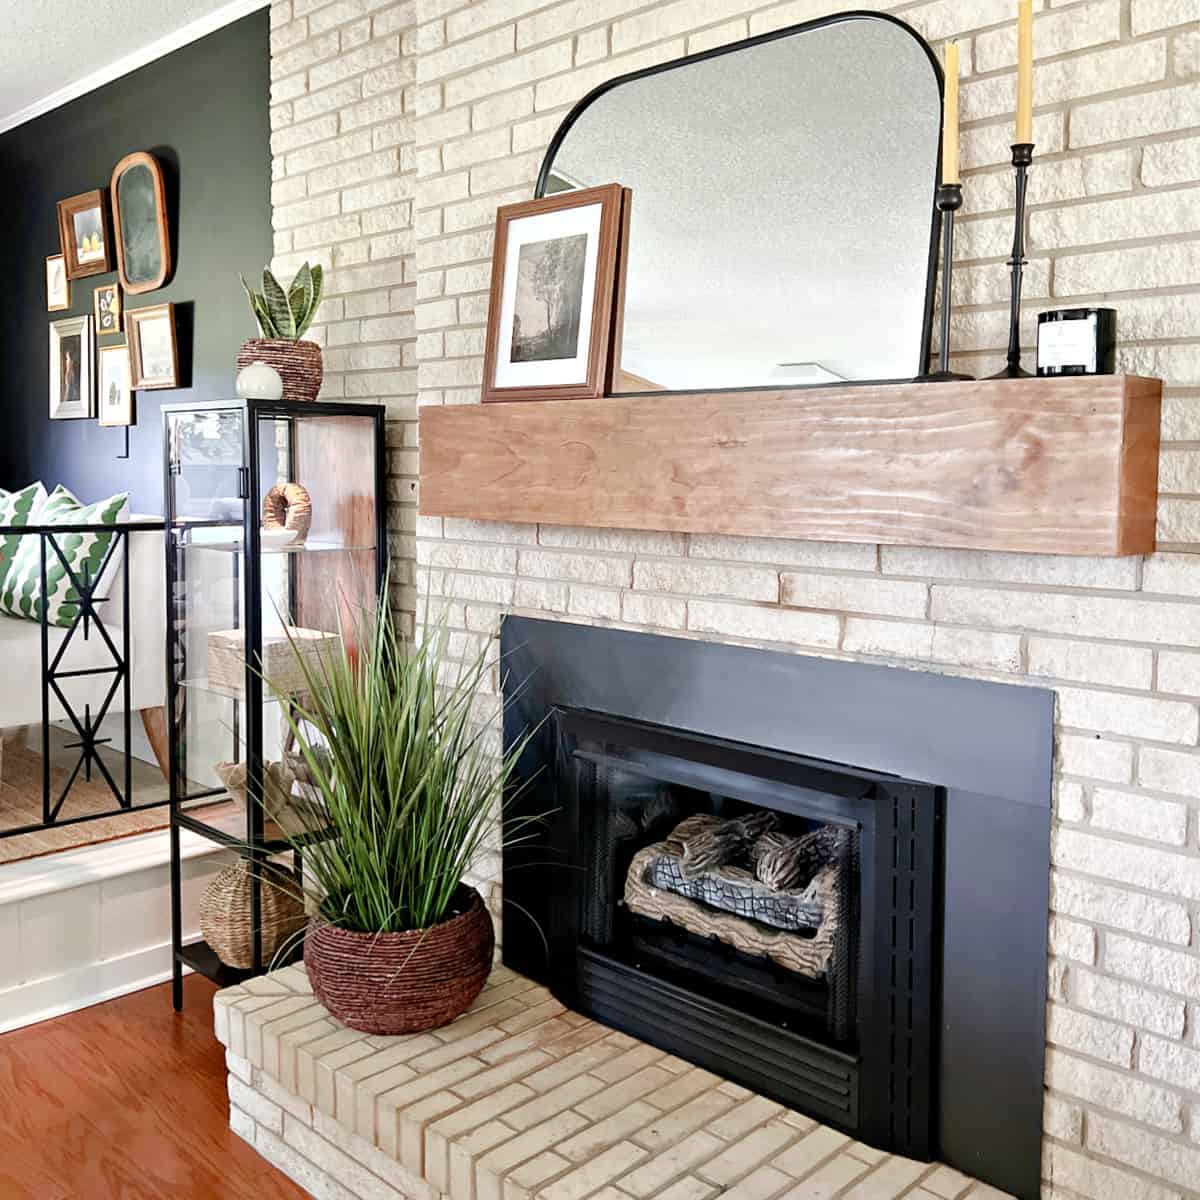 stone fireplace with DIY wood mantel shelf